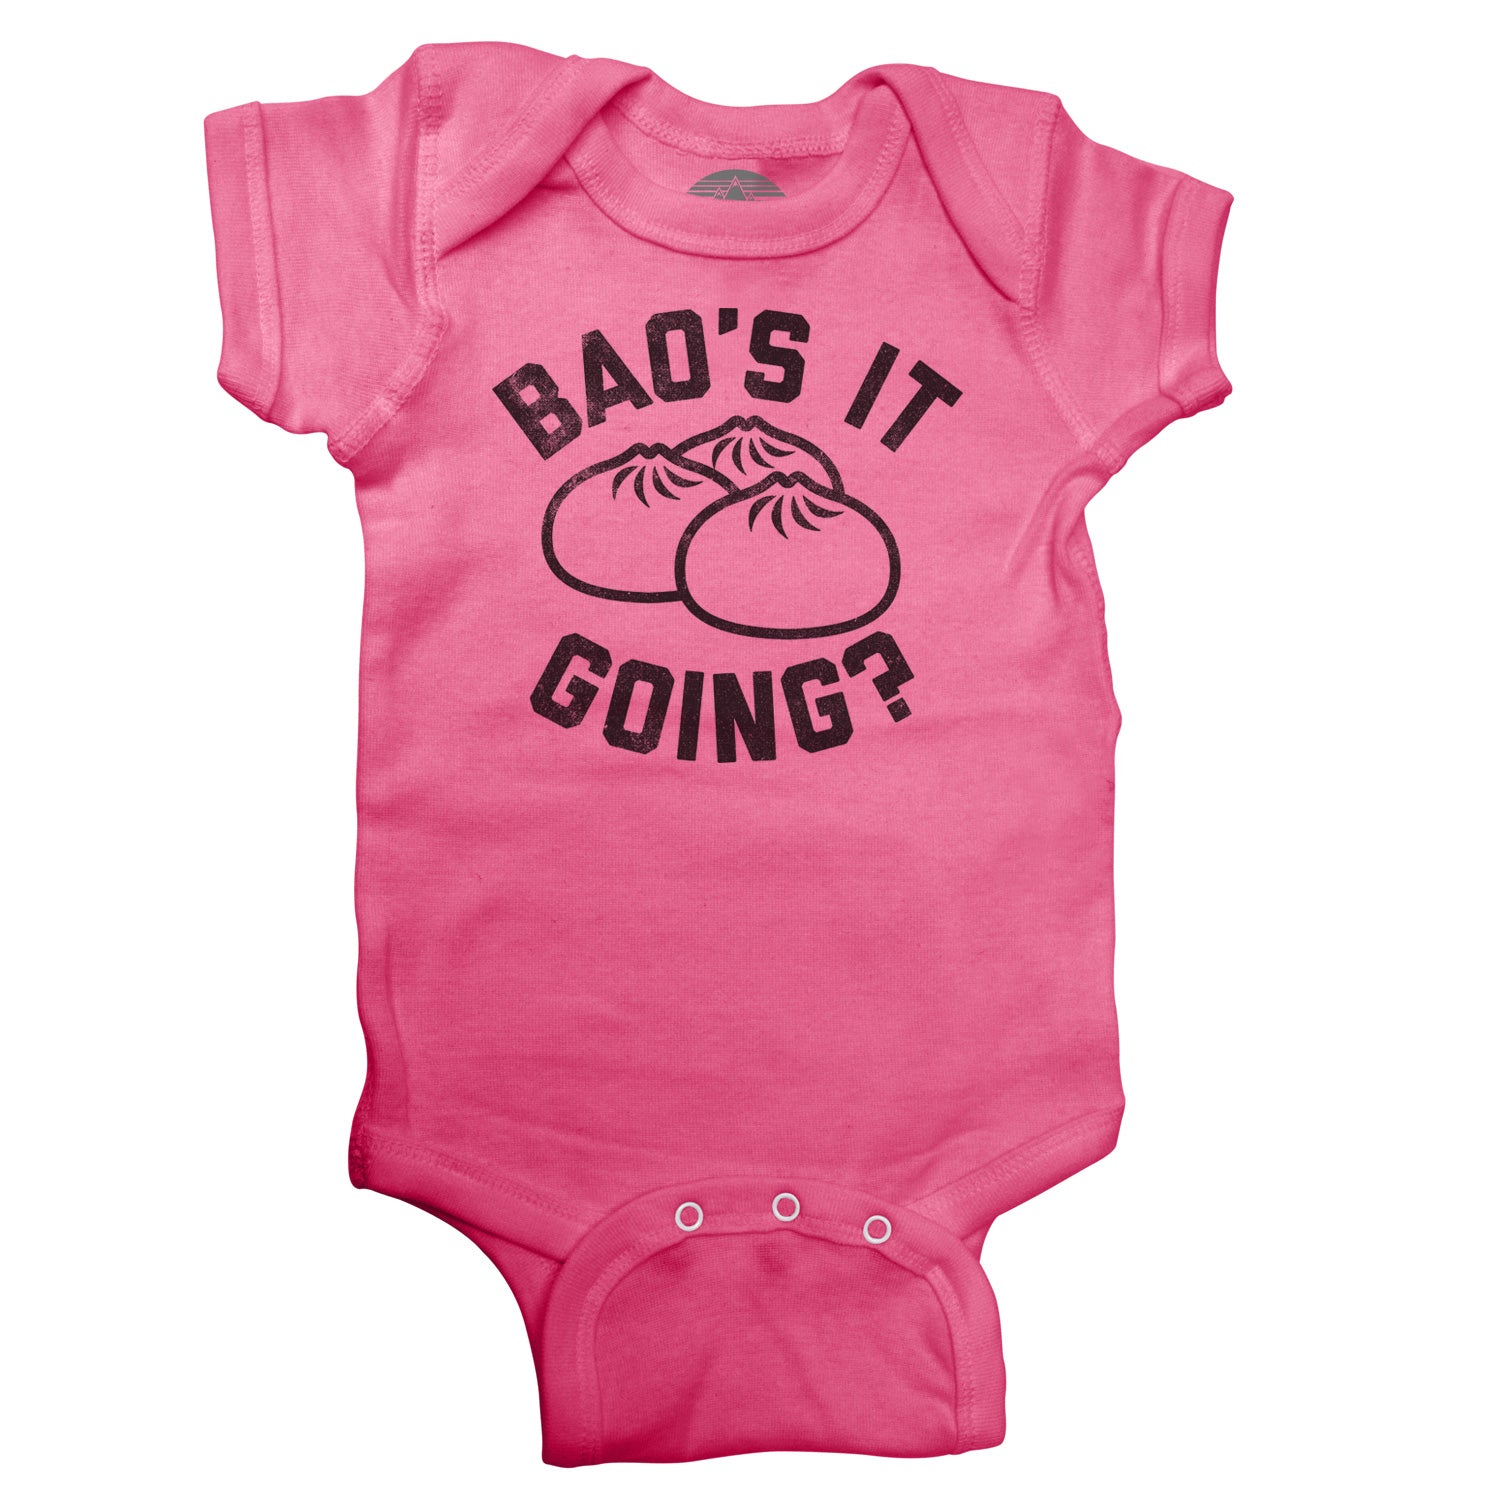 Bao's It Going Dim Sum Infant Bodysuit - Unisex Fit